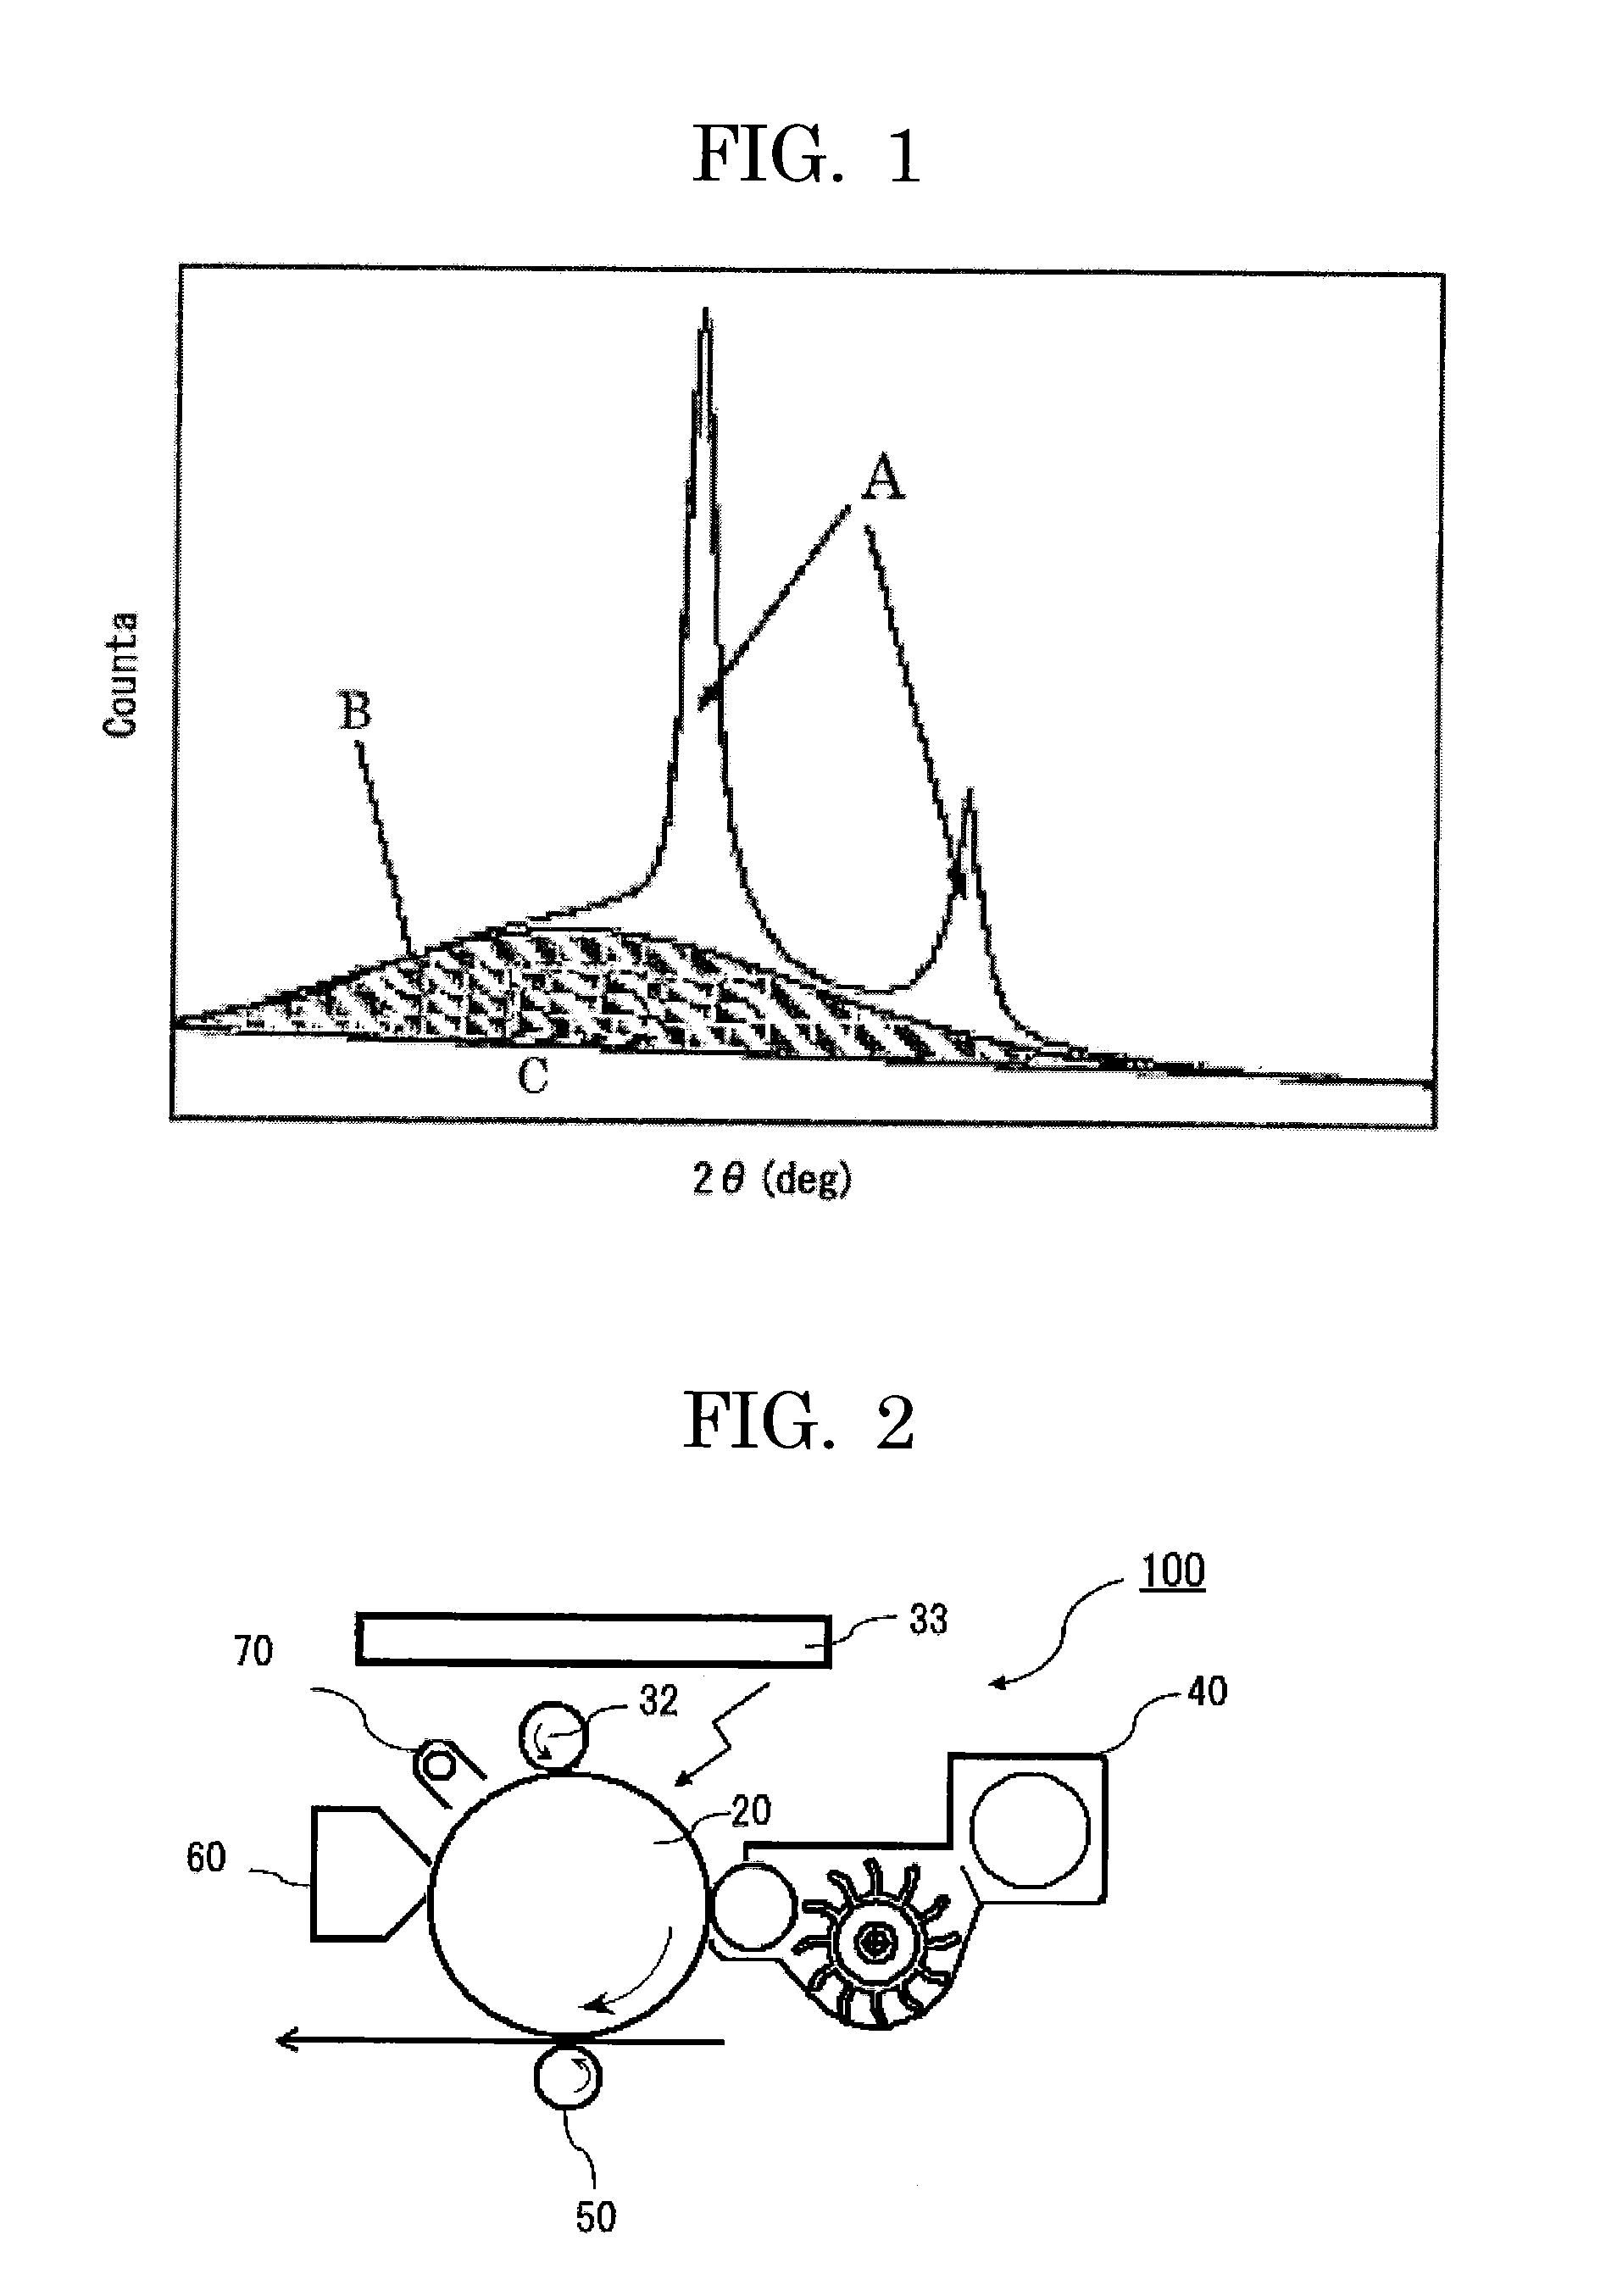 Magenta toner, developer, and image forming apparatus